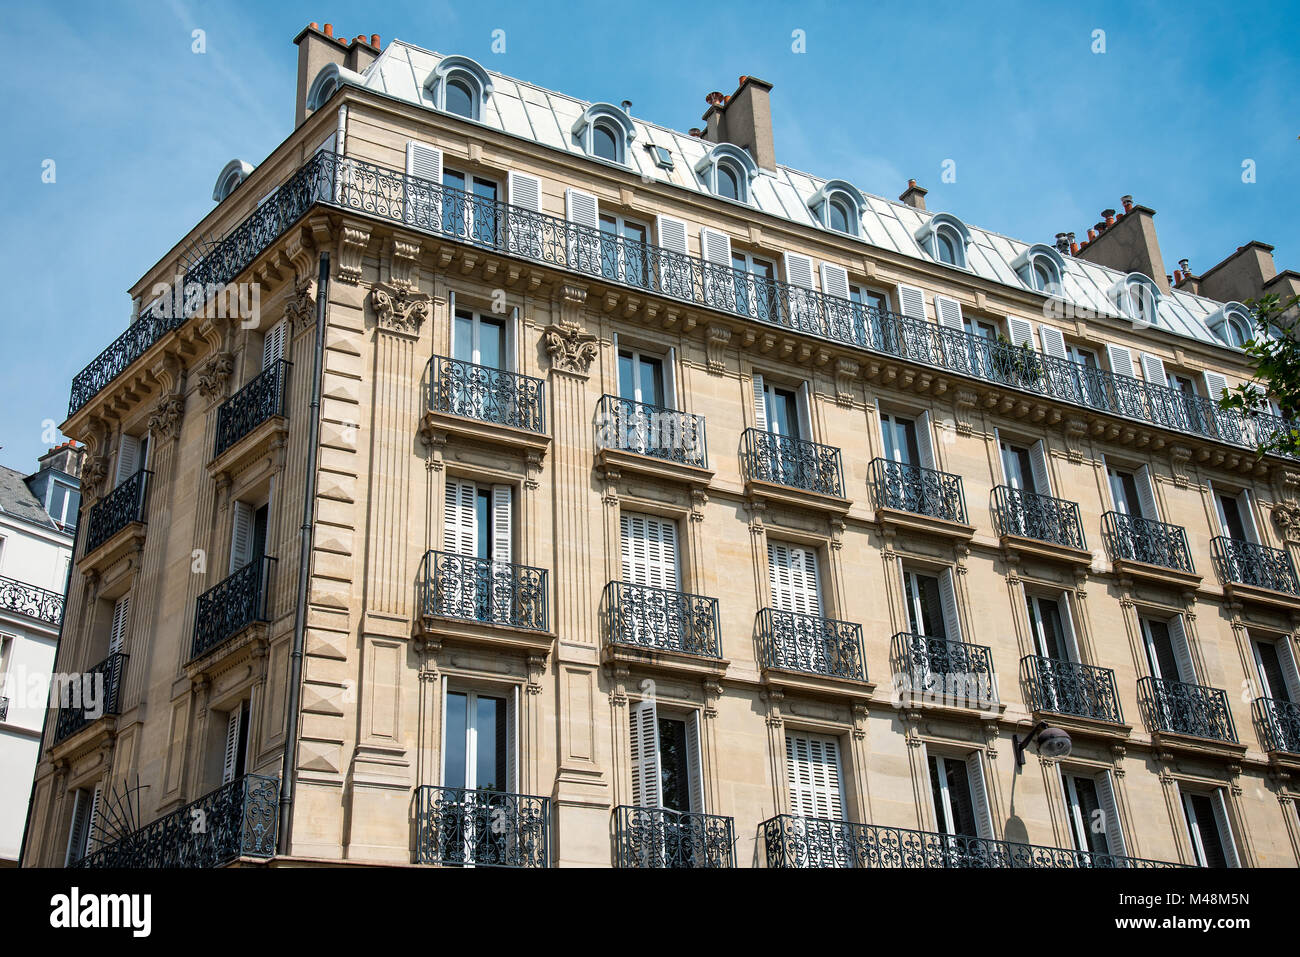 CHANEL HOUSE - Old House The entrance to Saint Tropez, France - May 12 2019  #ilonabarnabiphotonews Stock Photo - Alamy